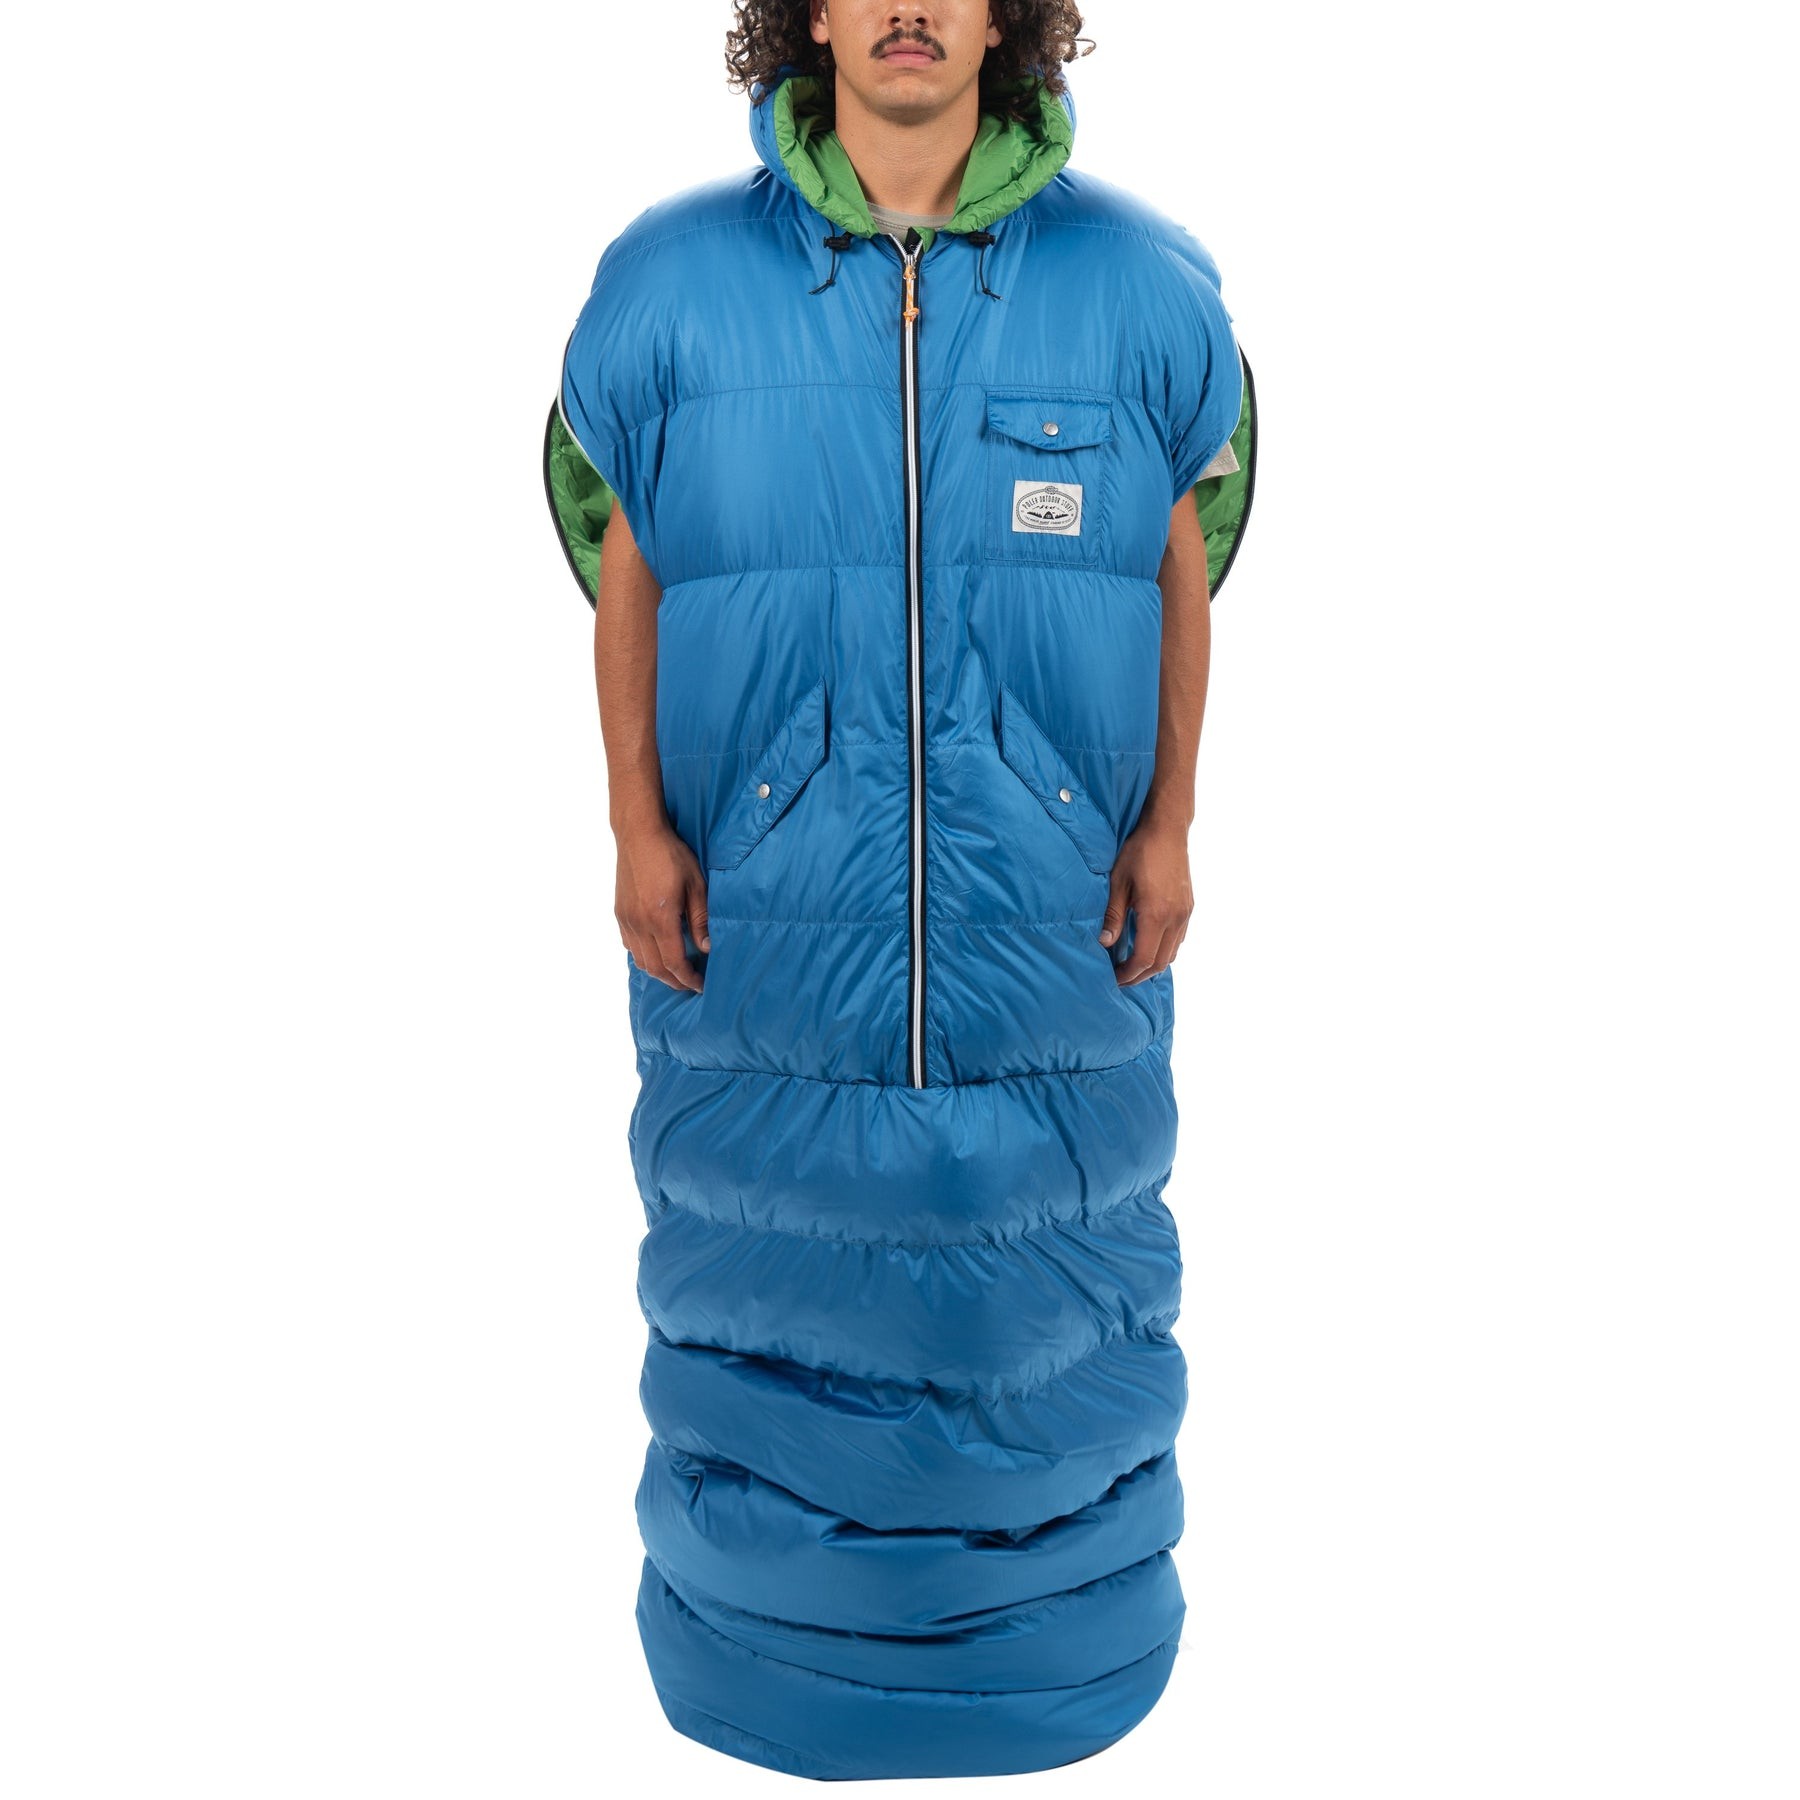 Poler Zonker Napsack Down Insulated Jacket/Sleeping Bag 